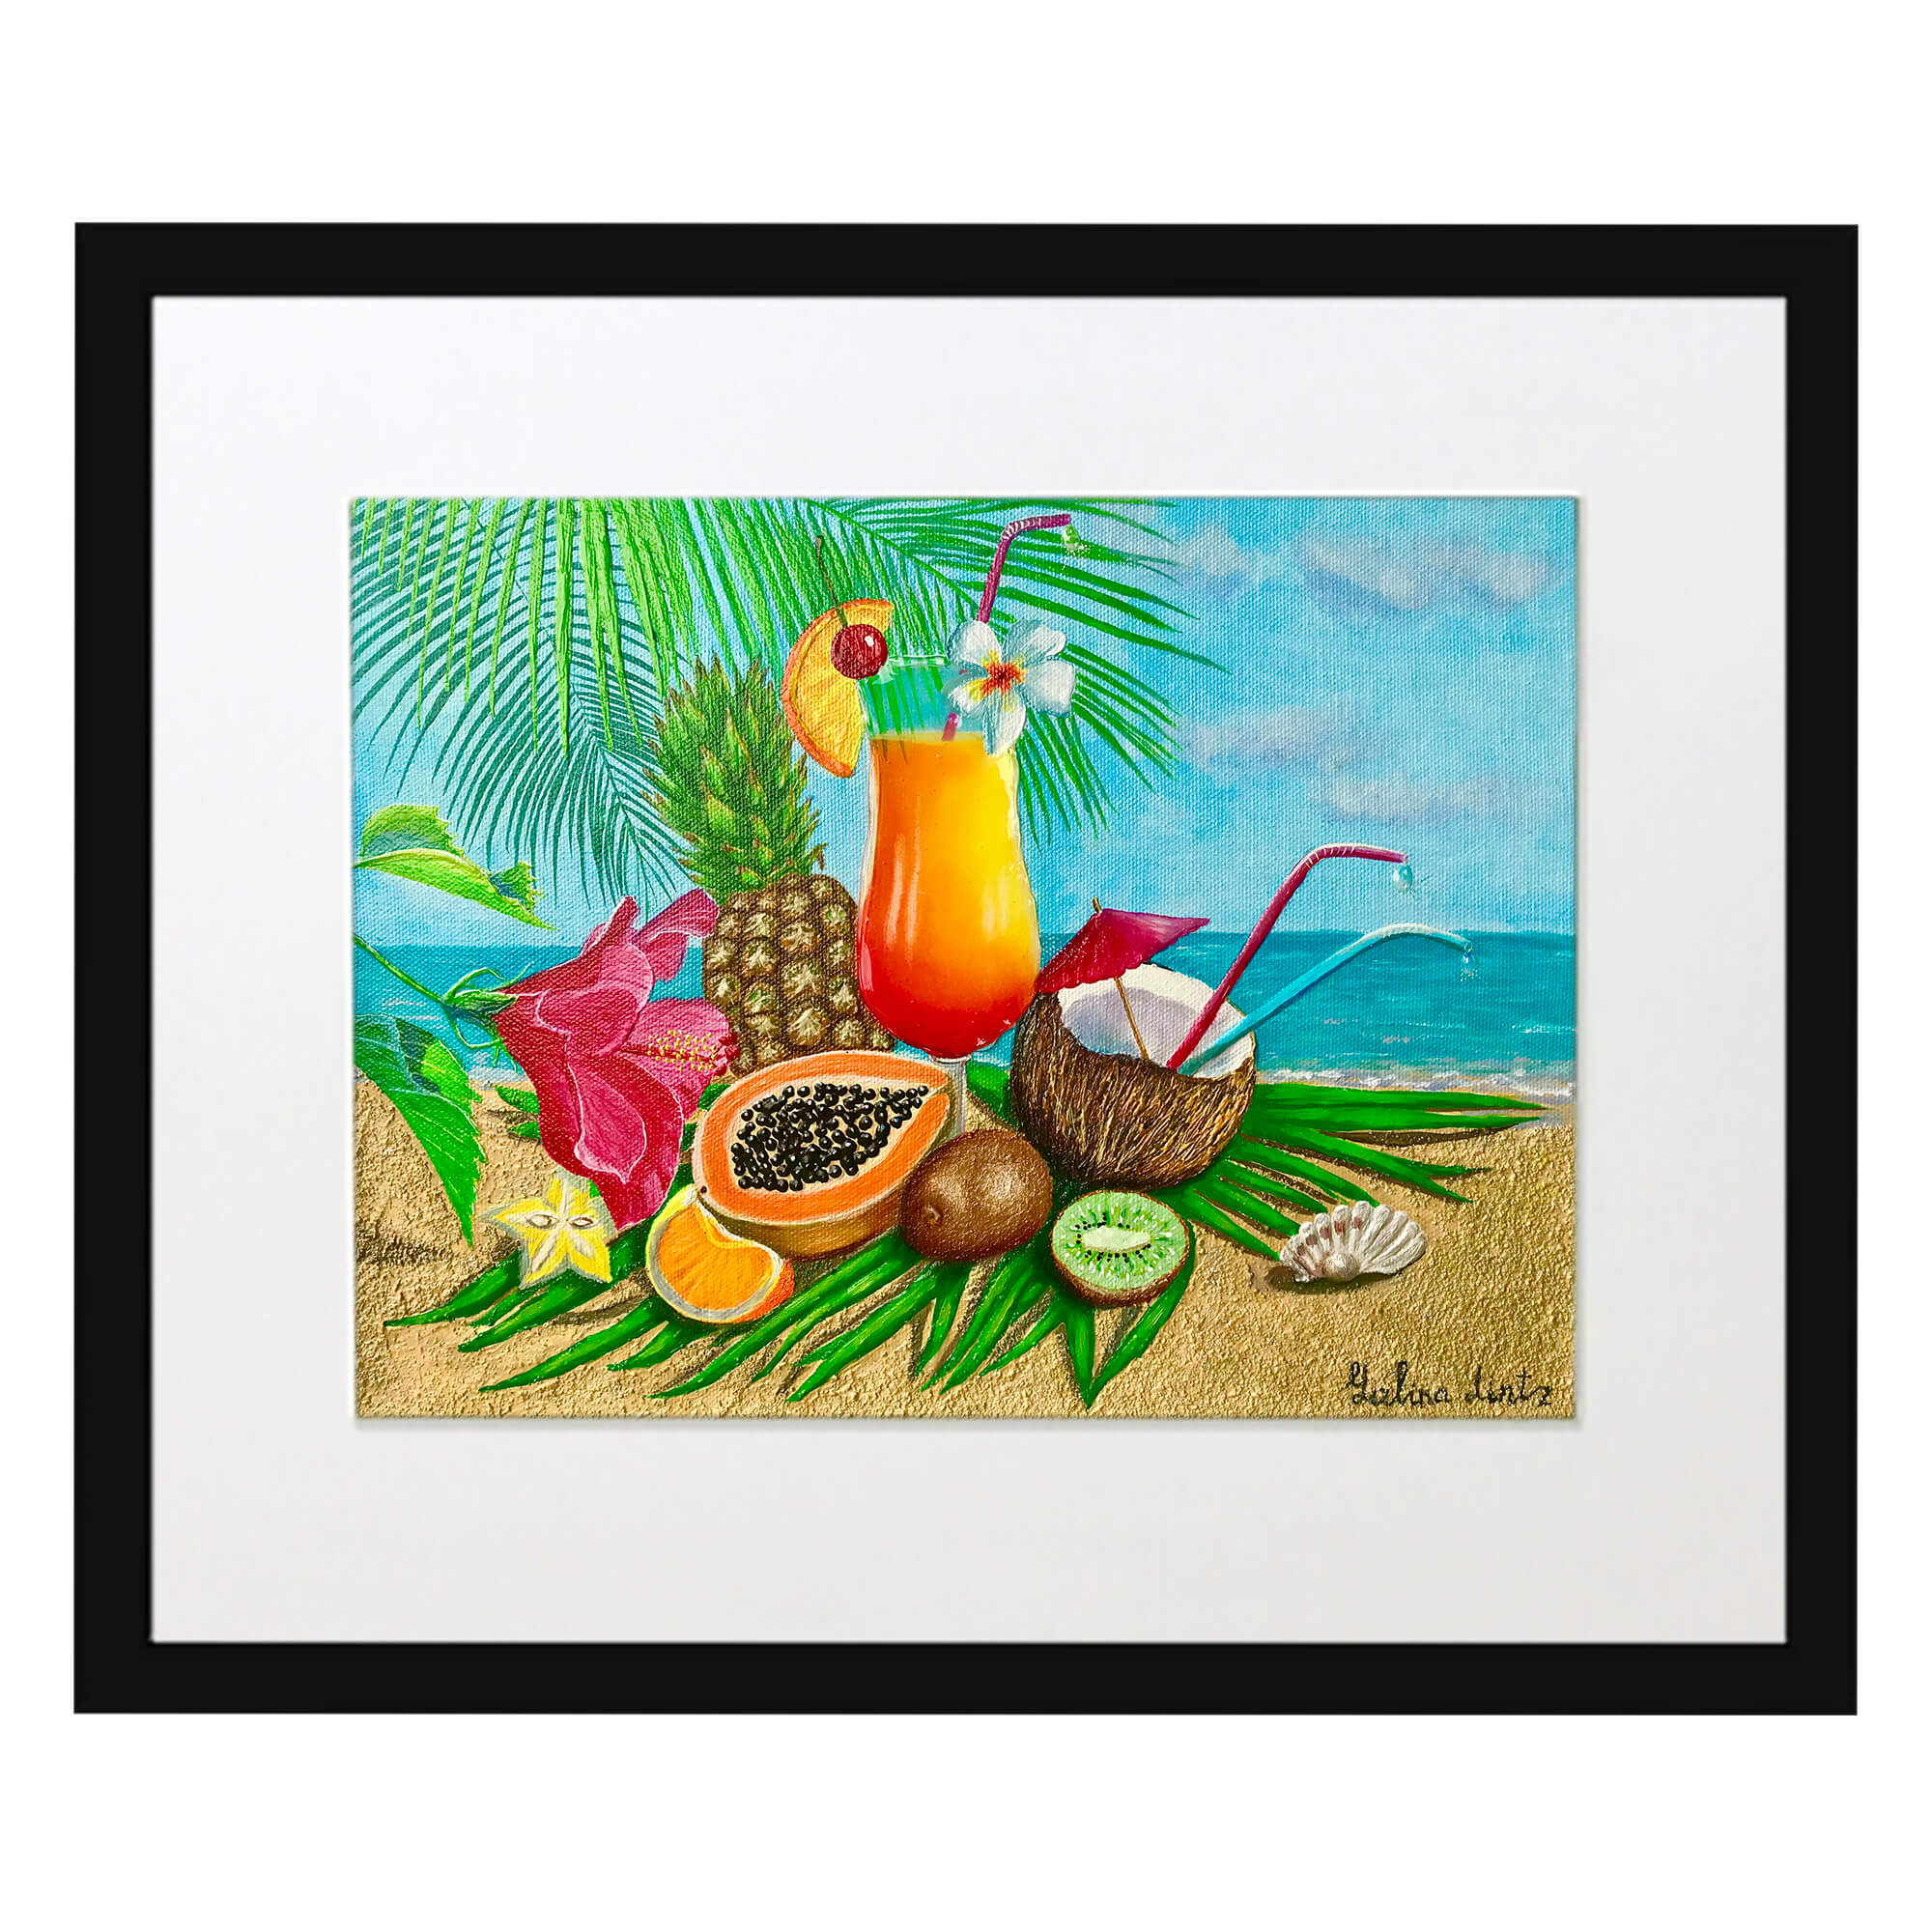 Matted art print with black frame showcasing a pineapple Galina Lintz